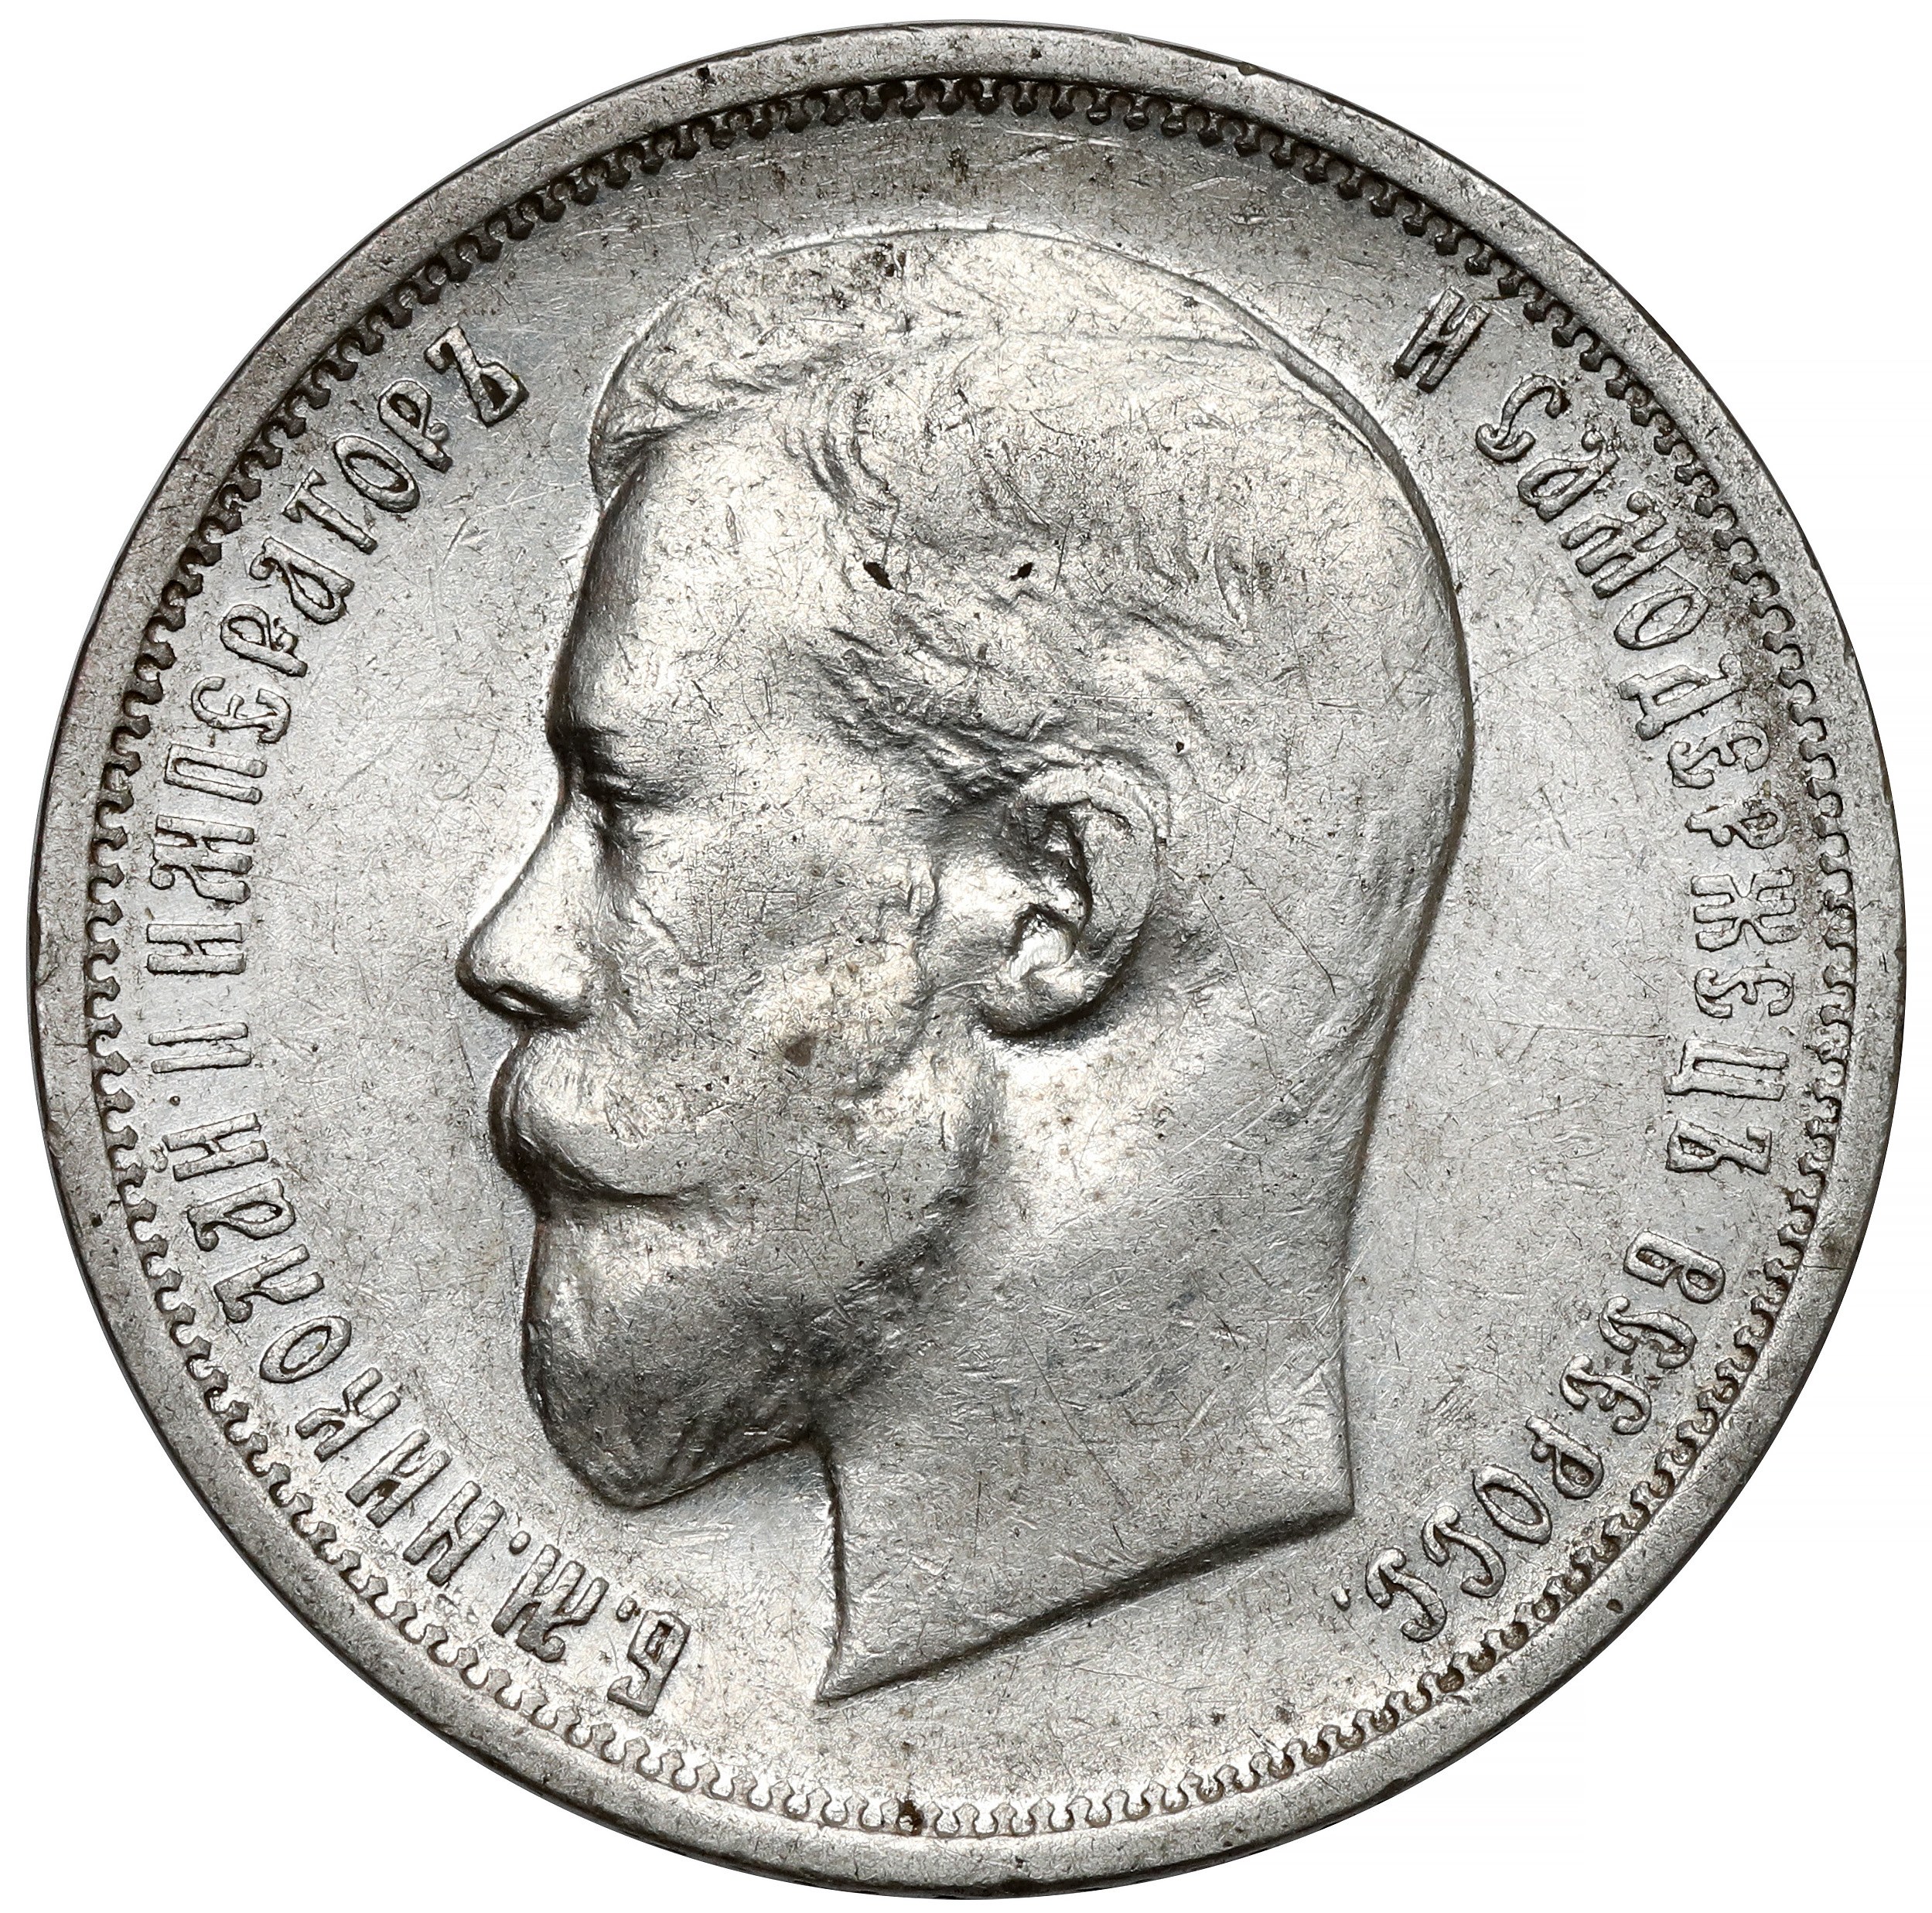 Монета 50 копеек года серебро. Монета 50 копеек серебром. Серебряные 50 копеек 1911 года. Серебряные монеты 1911 года. 50 Серебряная монета.